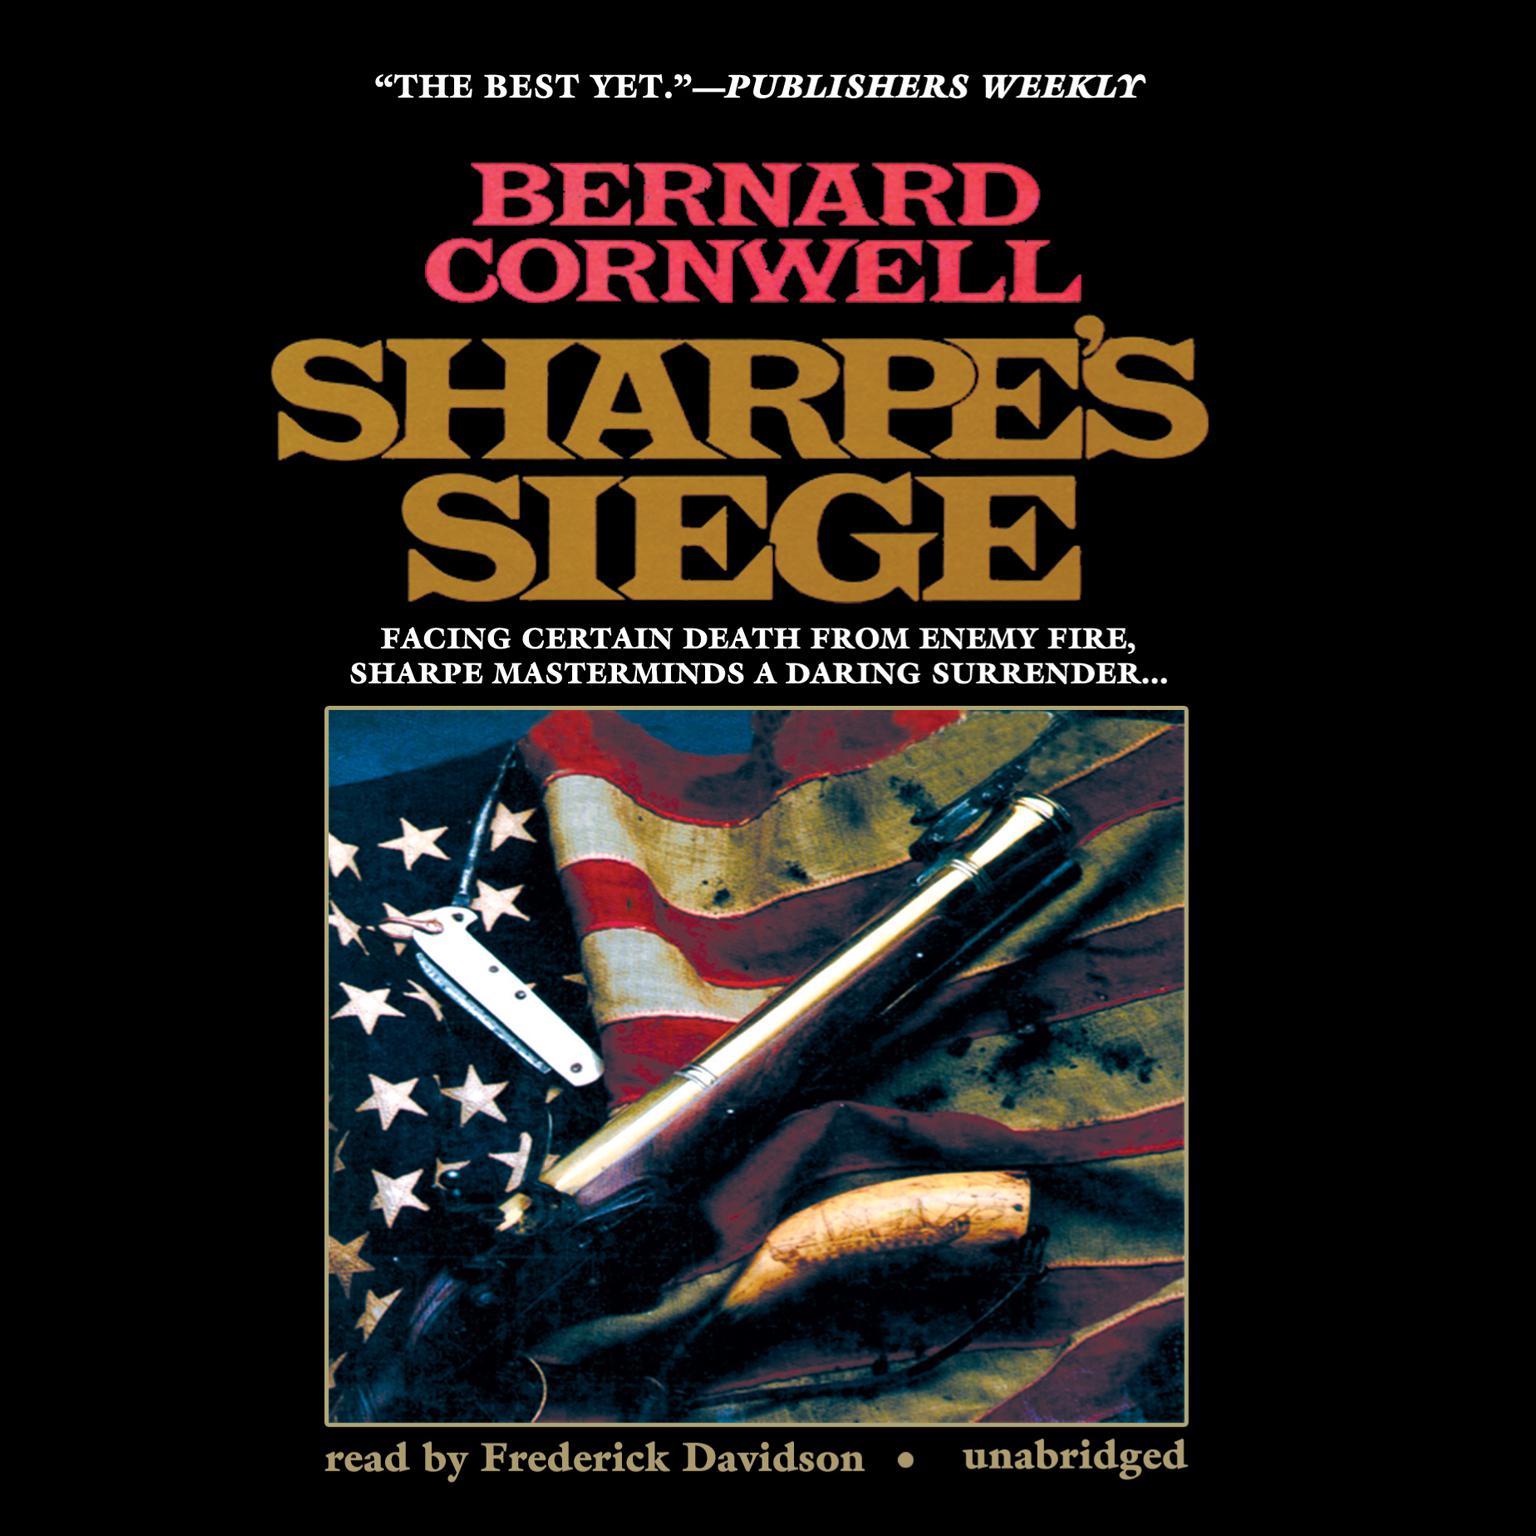 Sharpe’s Siege: Richard Sharpe and the Winter Campaign, 1814 Audiobook, by Bernard Cornwell